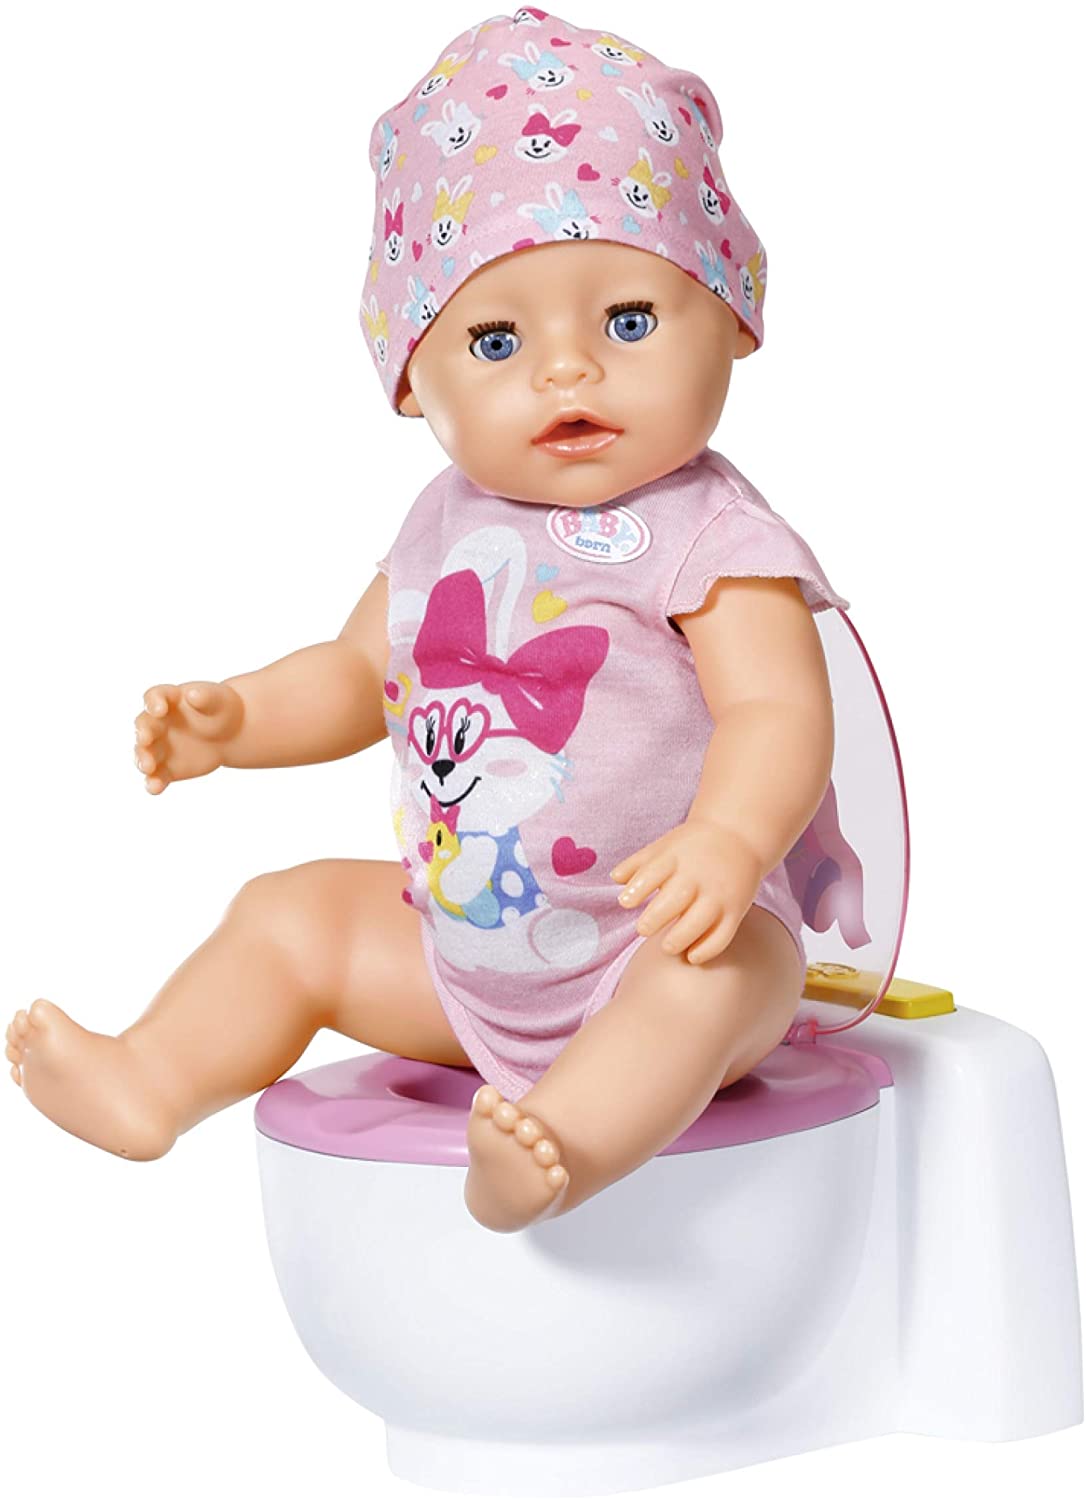 baby born interactive toilet Baby born interactive doll still children bathtub toys want play